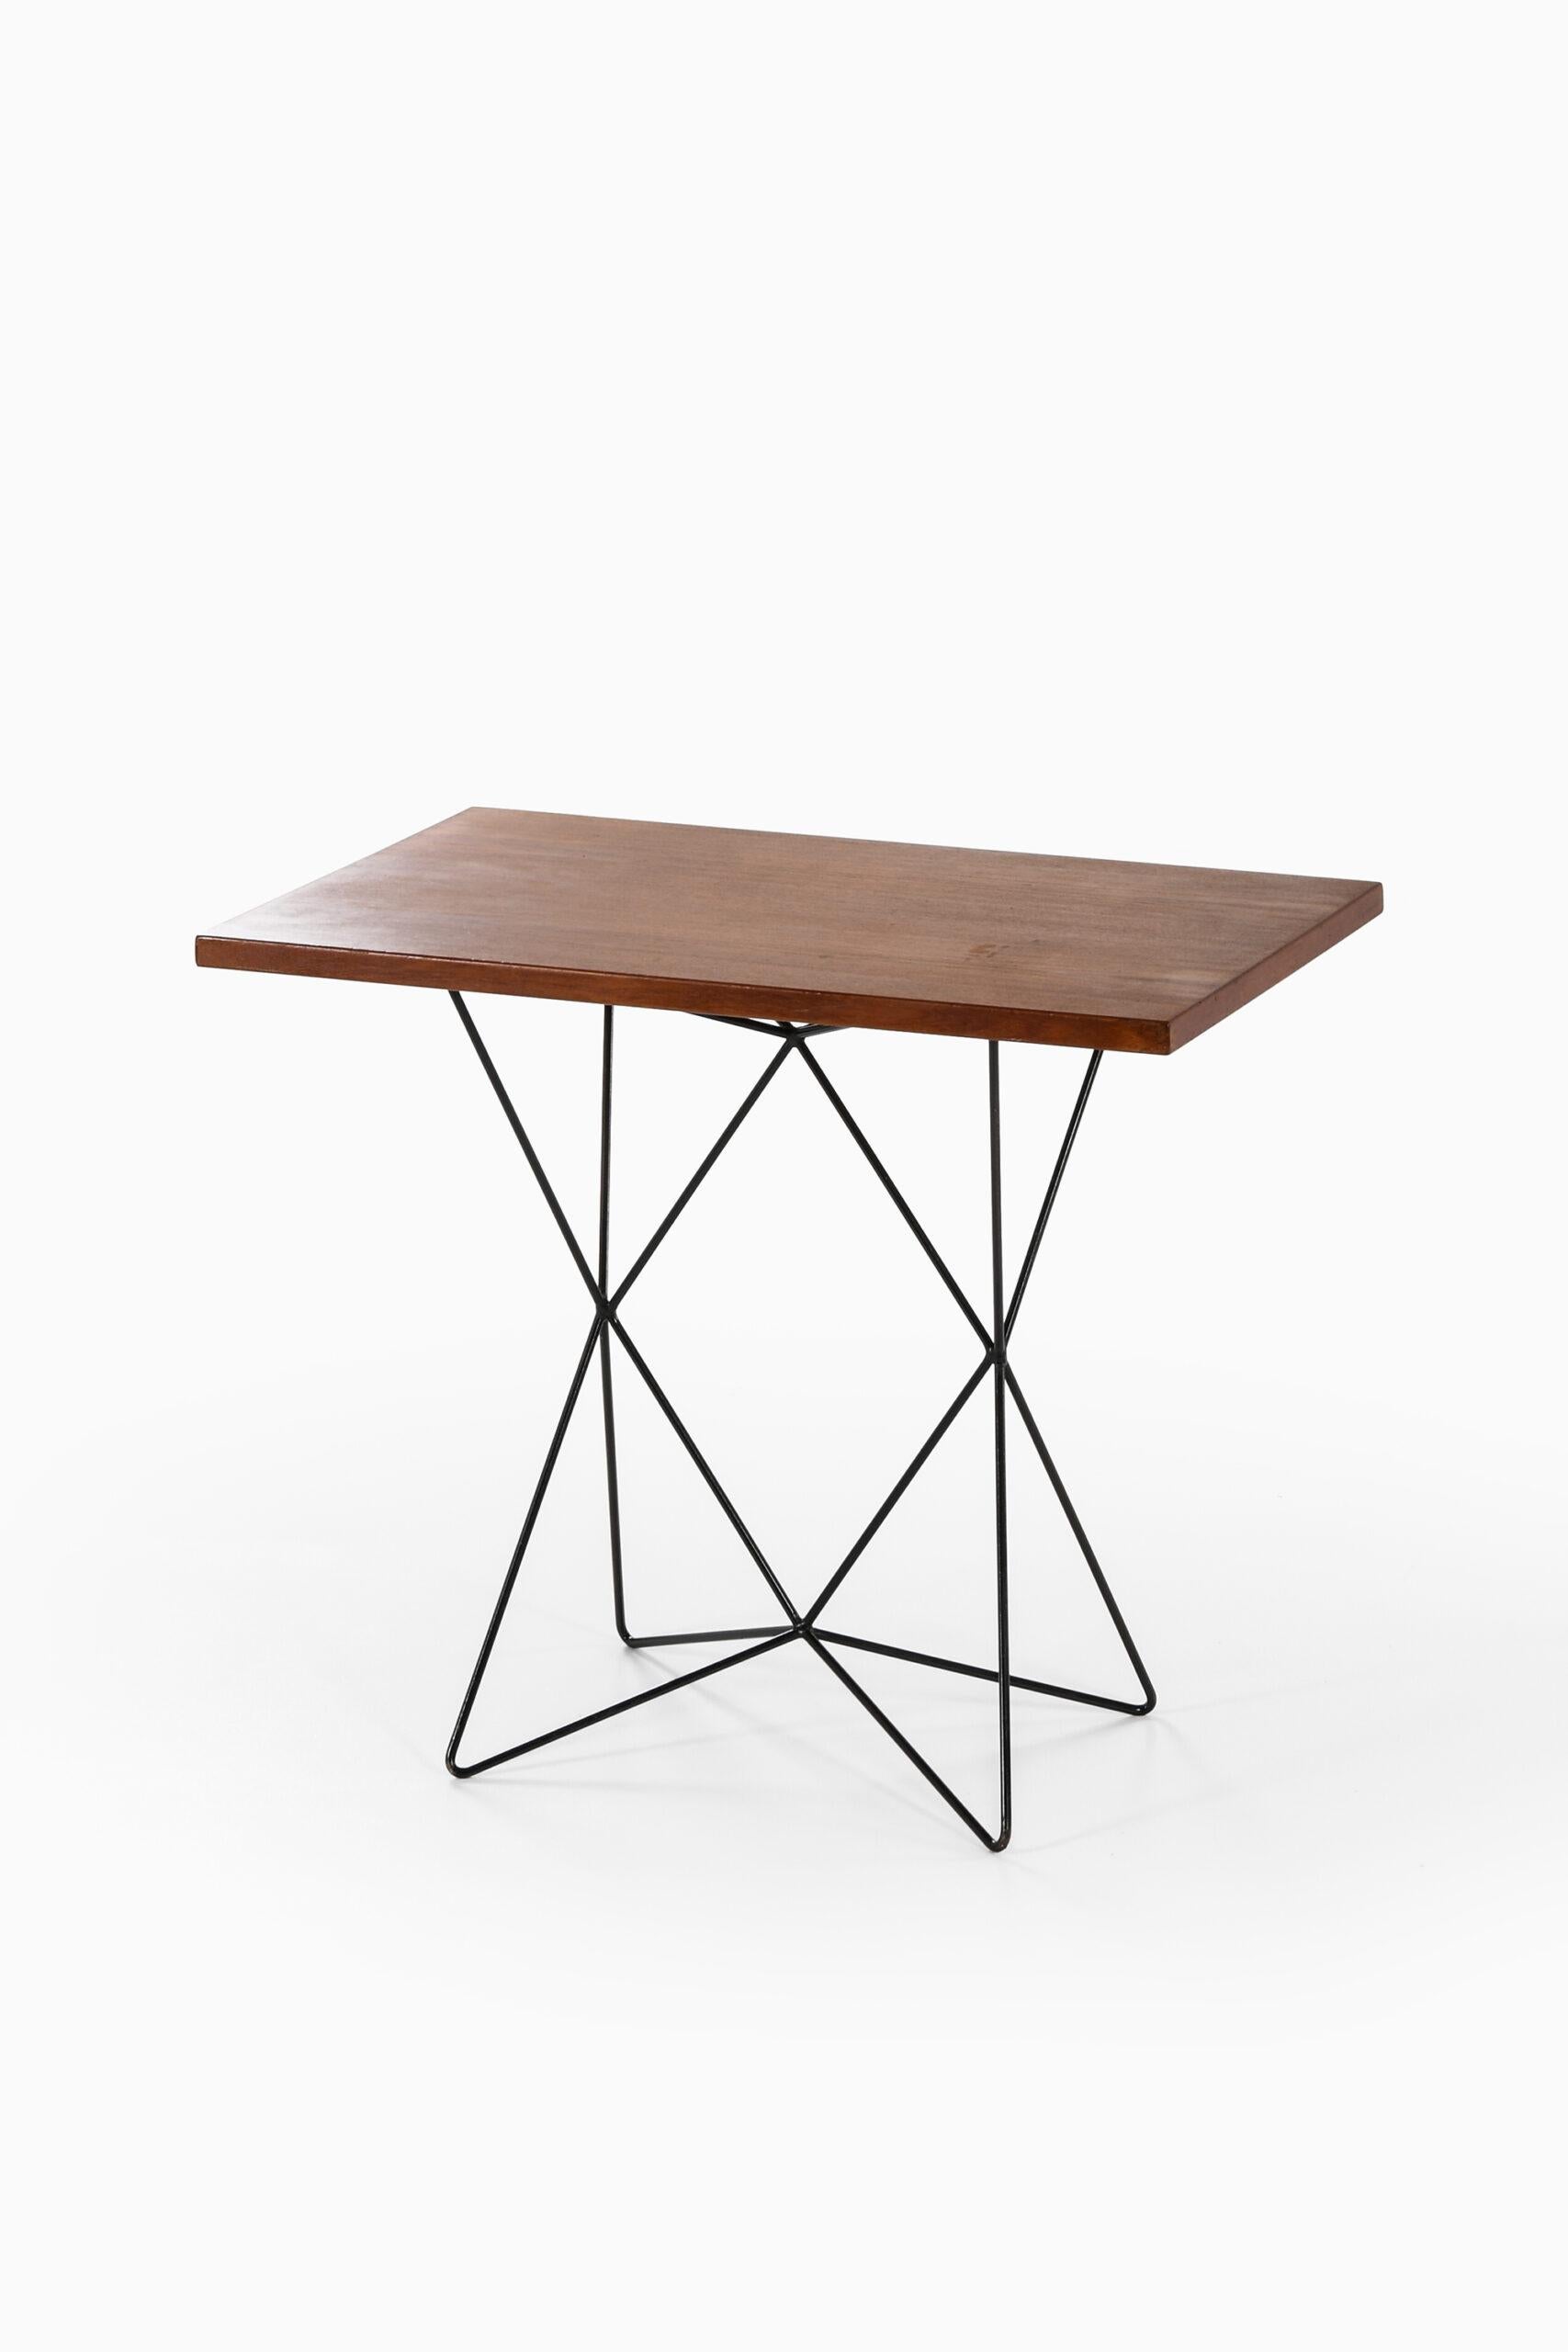 Milieu du XXe siècle Bengt Johan Gullberg table modèle A2 produite par Gullberg Trading Company en vente